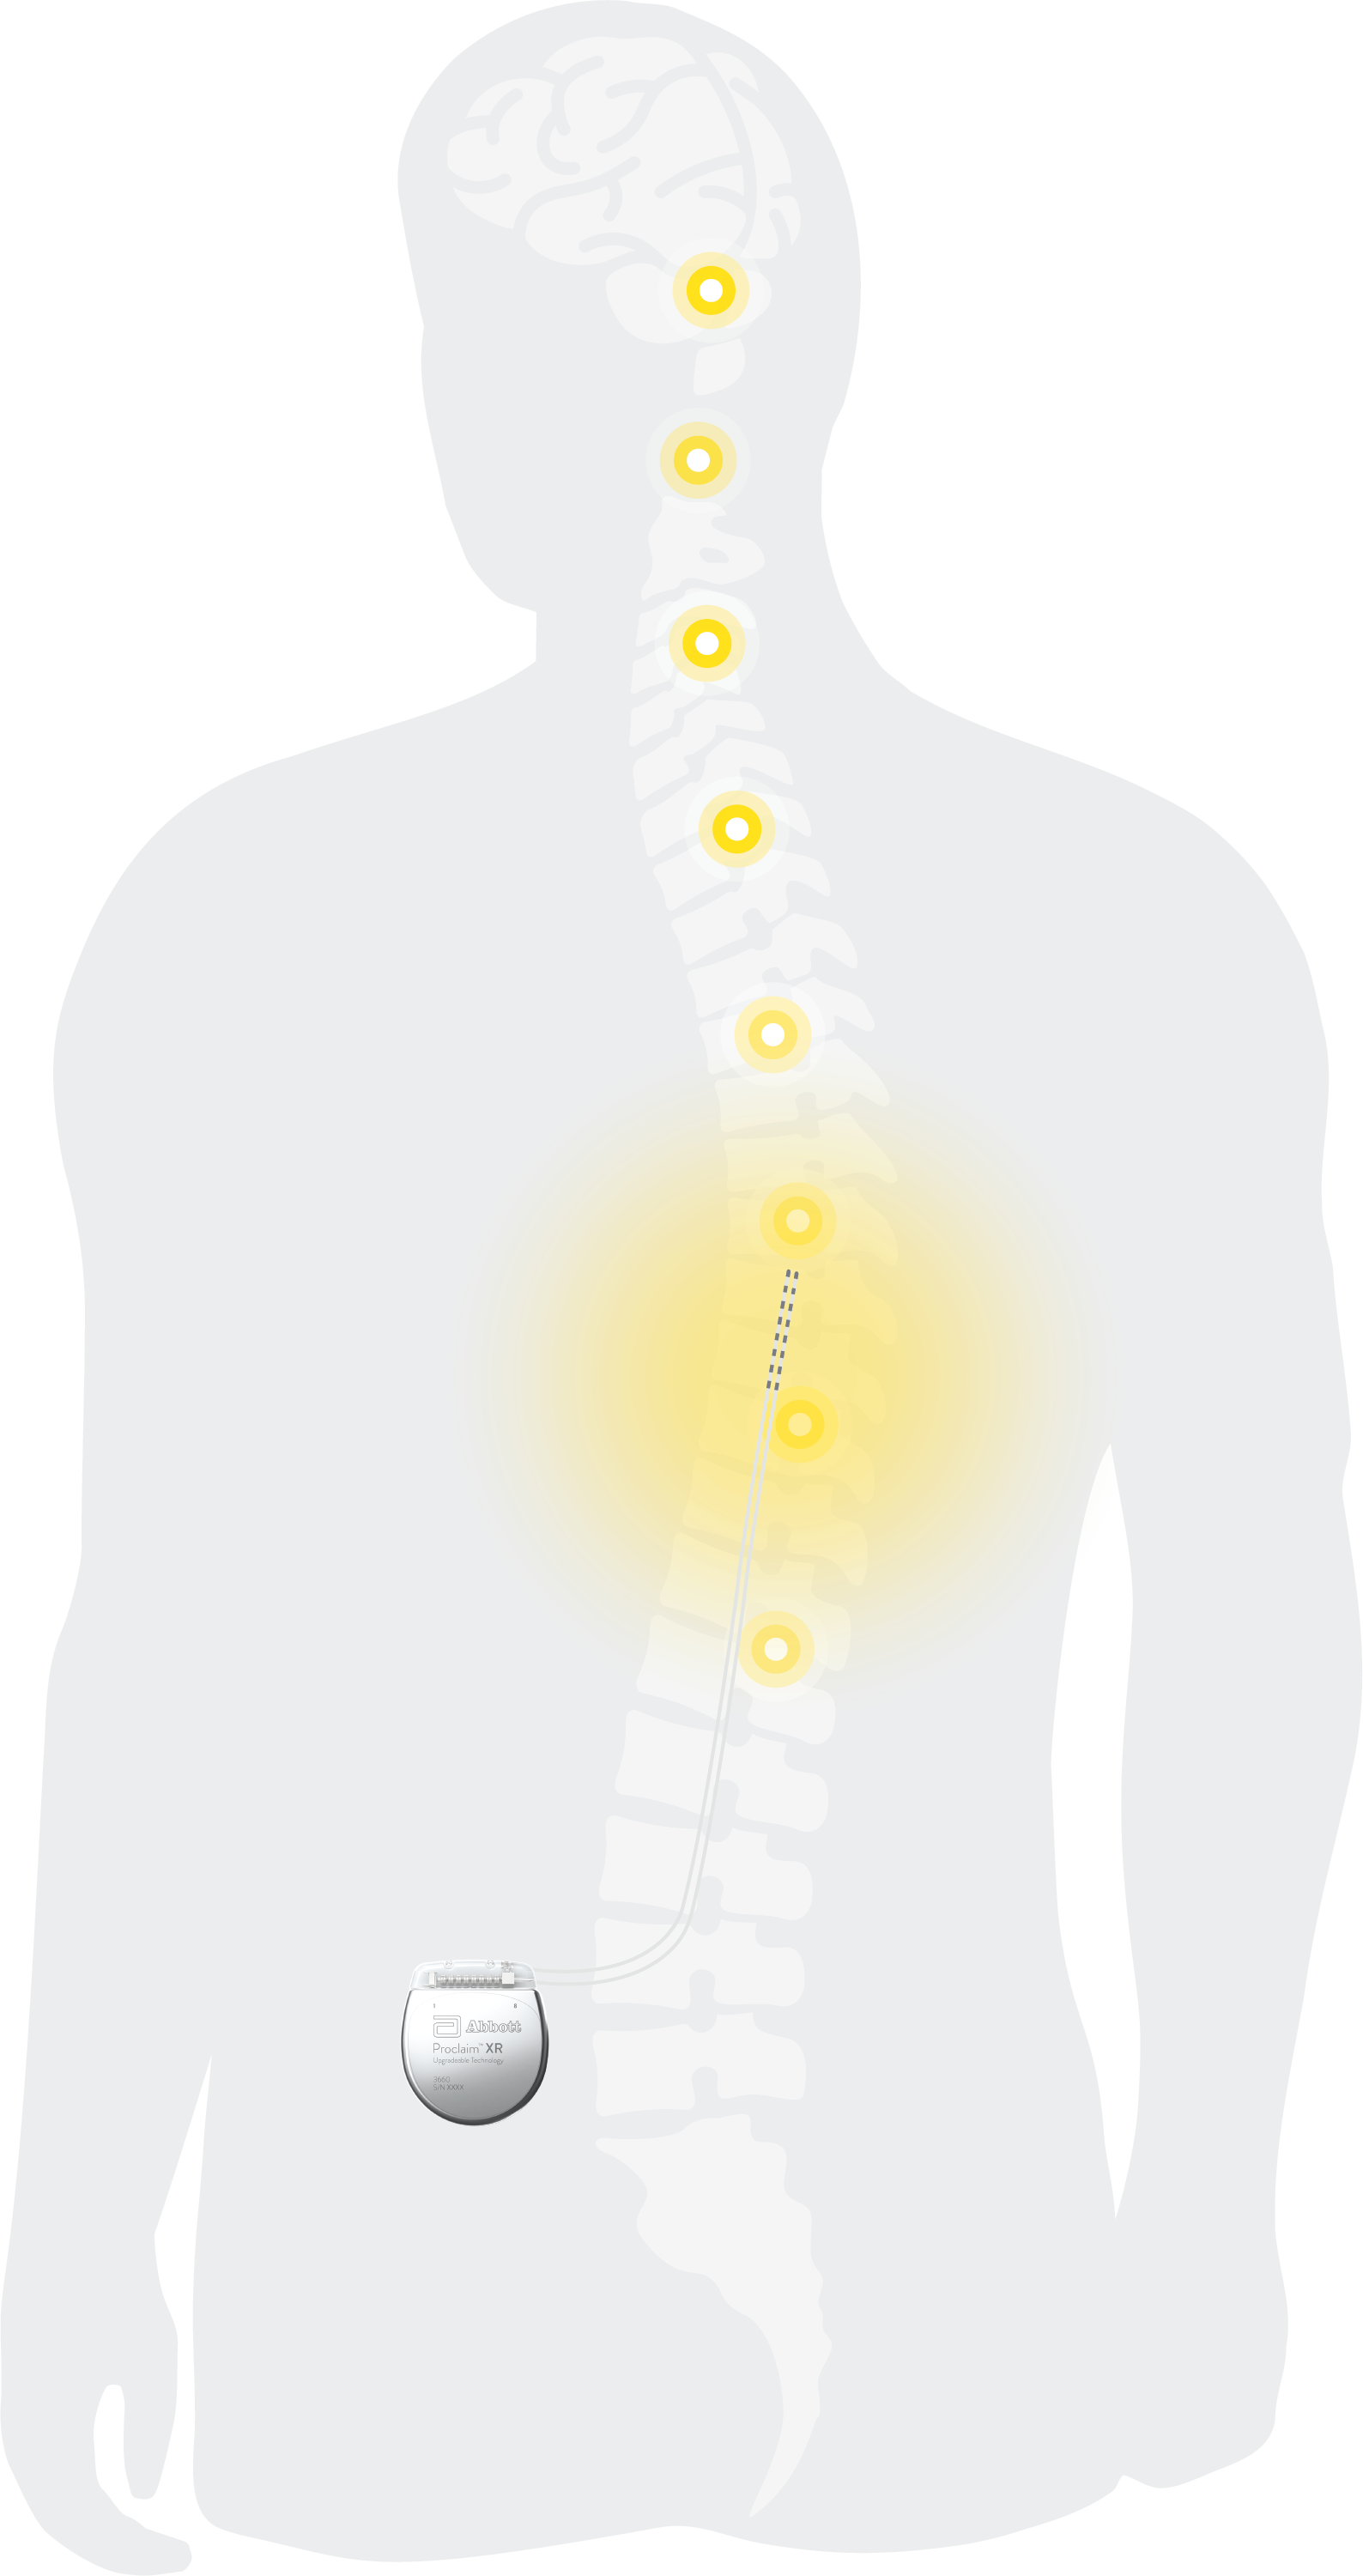 implantation abbott spinal cord stimulator